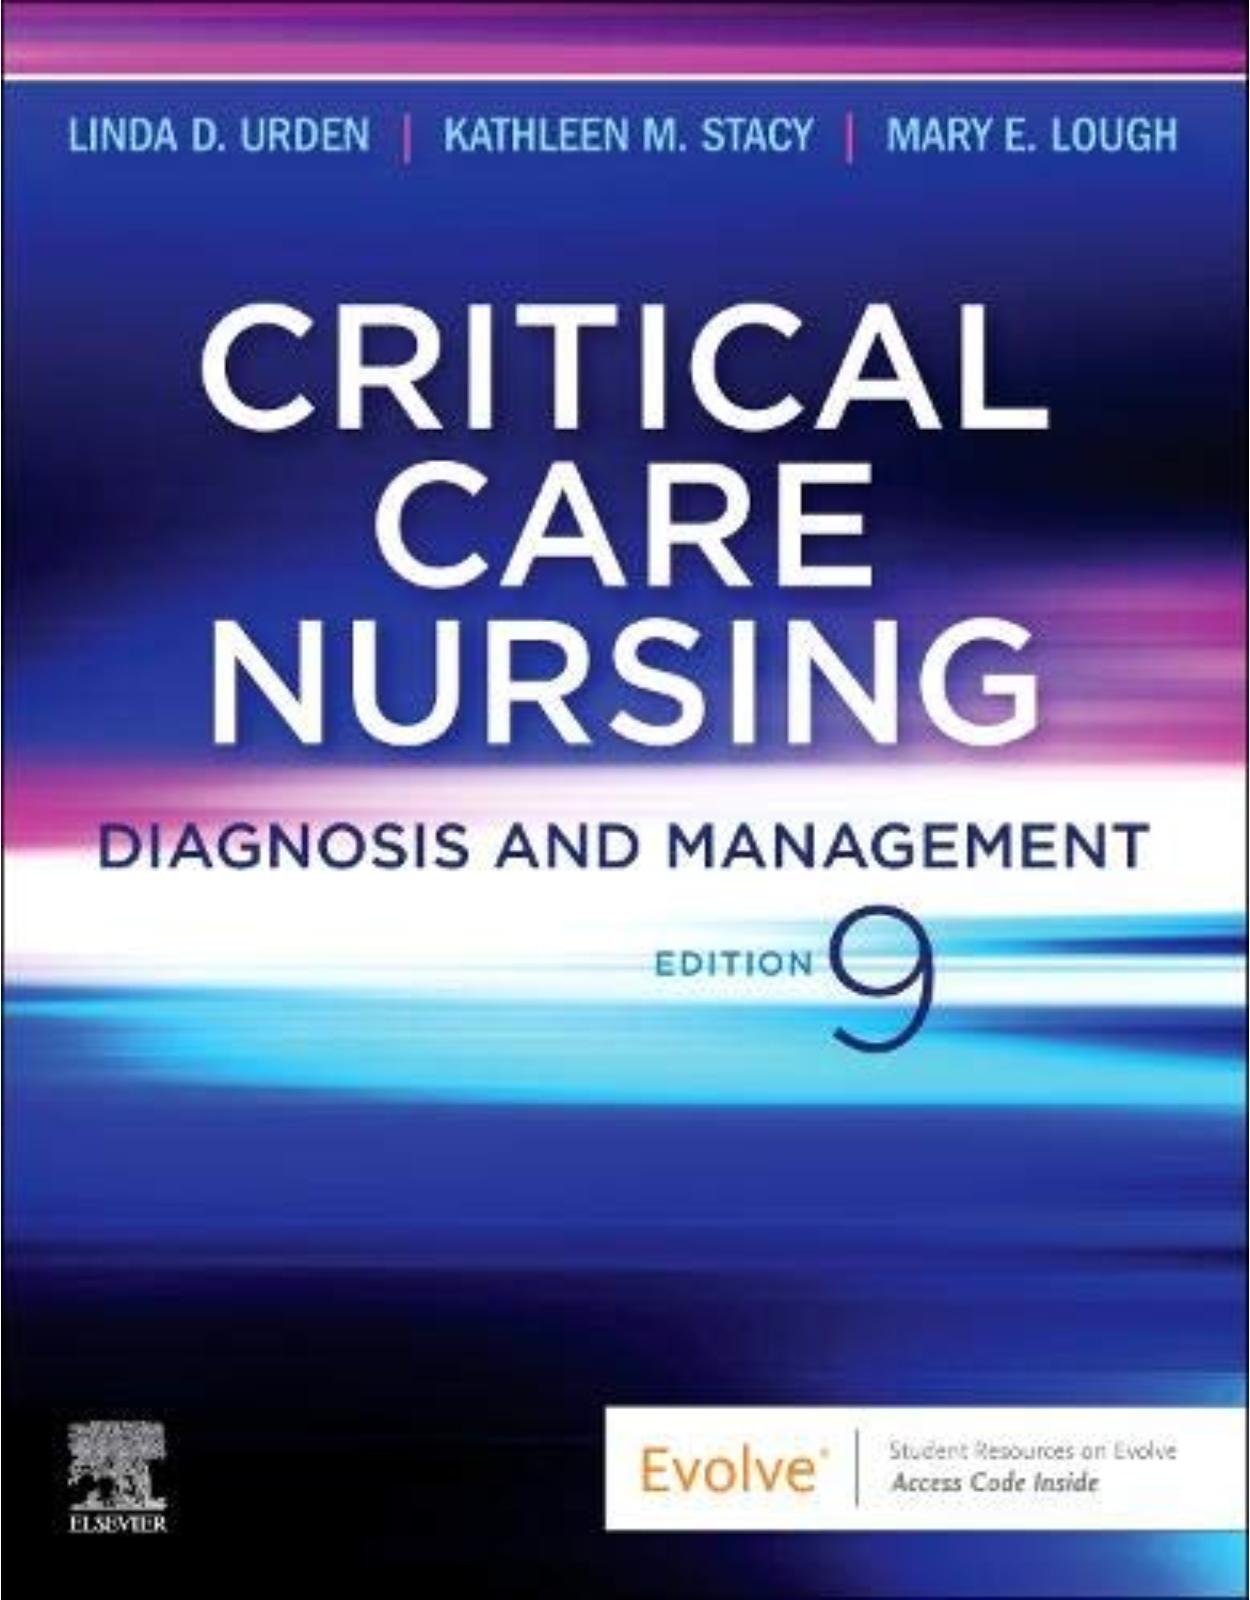 Critical Care Nursing: Diagnosis and Management 